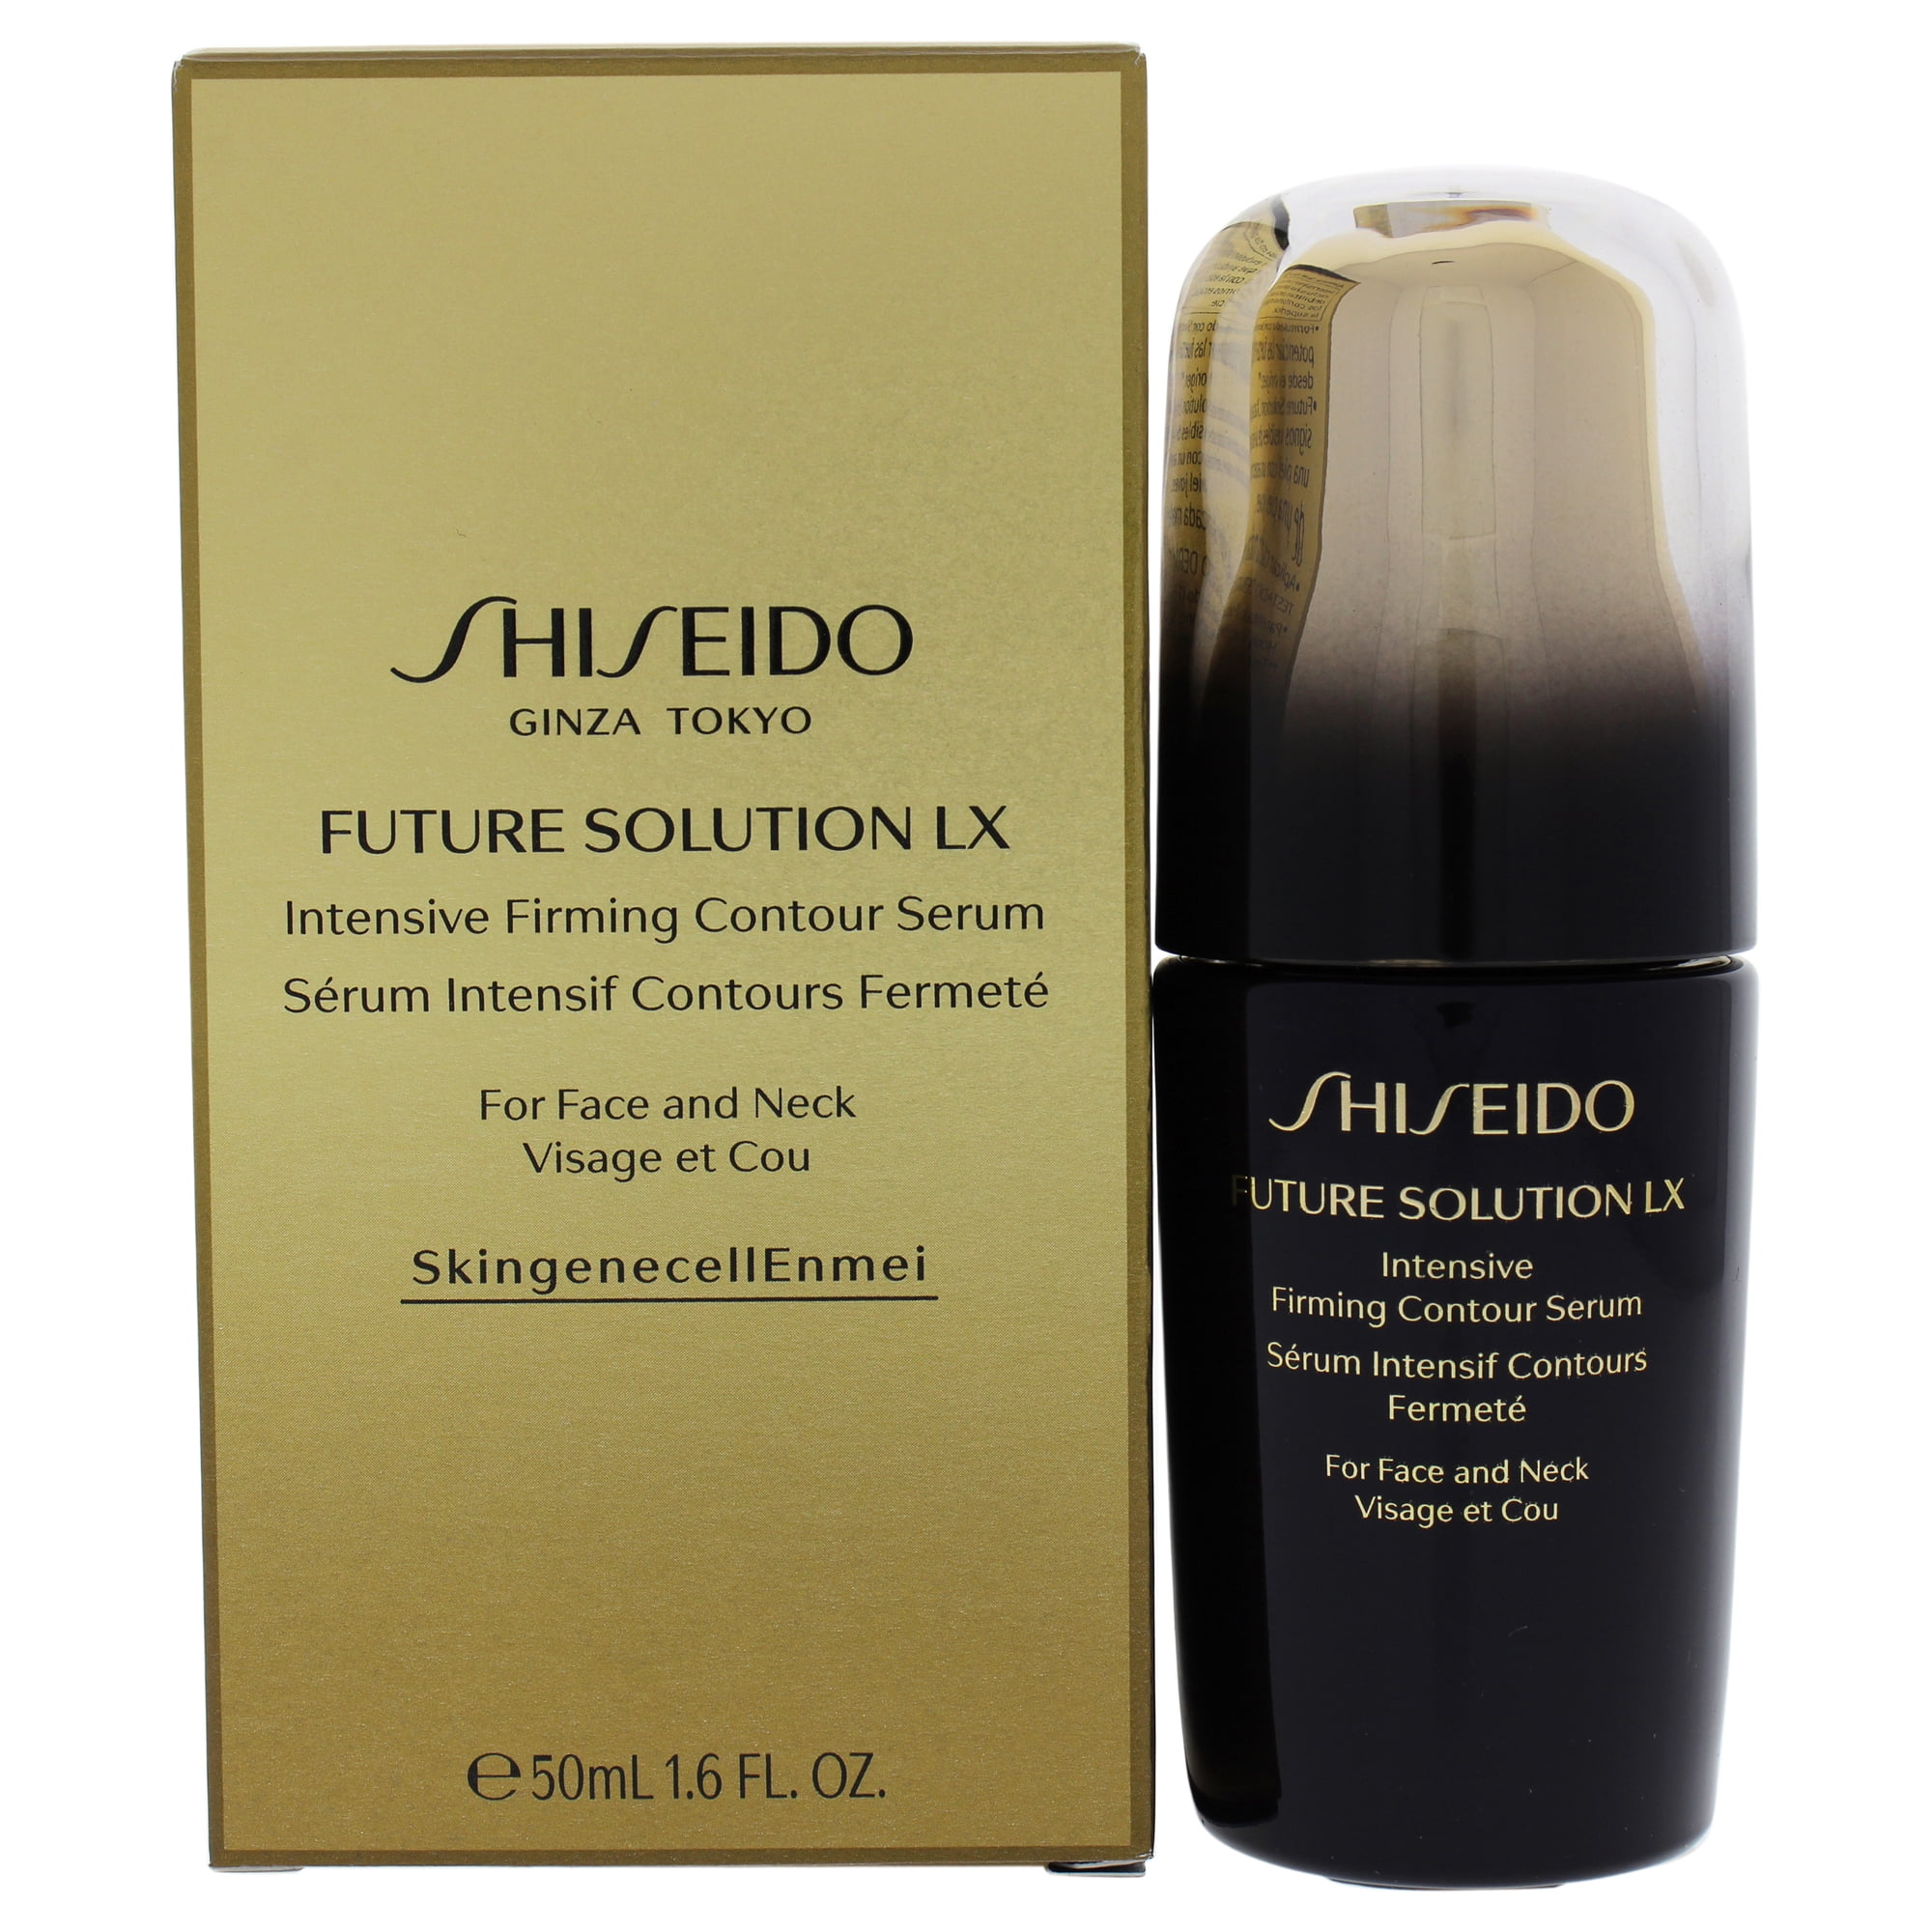 Shiseido Future solution LX Serum. Shiseido Future solution LX ночной крем чье производство. Шисейдо тон Футуре отзывы. Shiseido 101 Ginkgo отзывы.